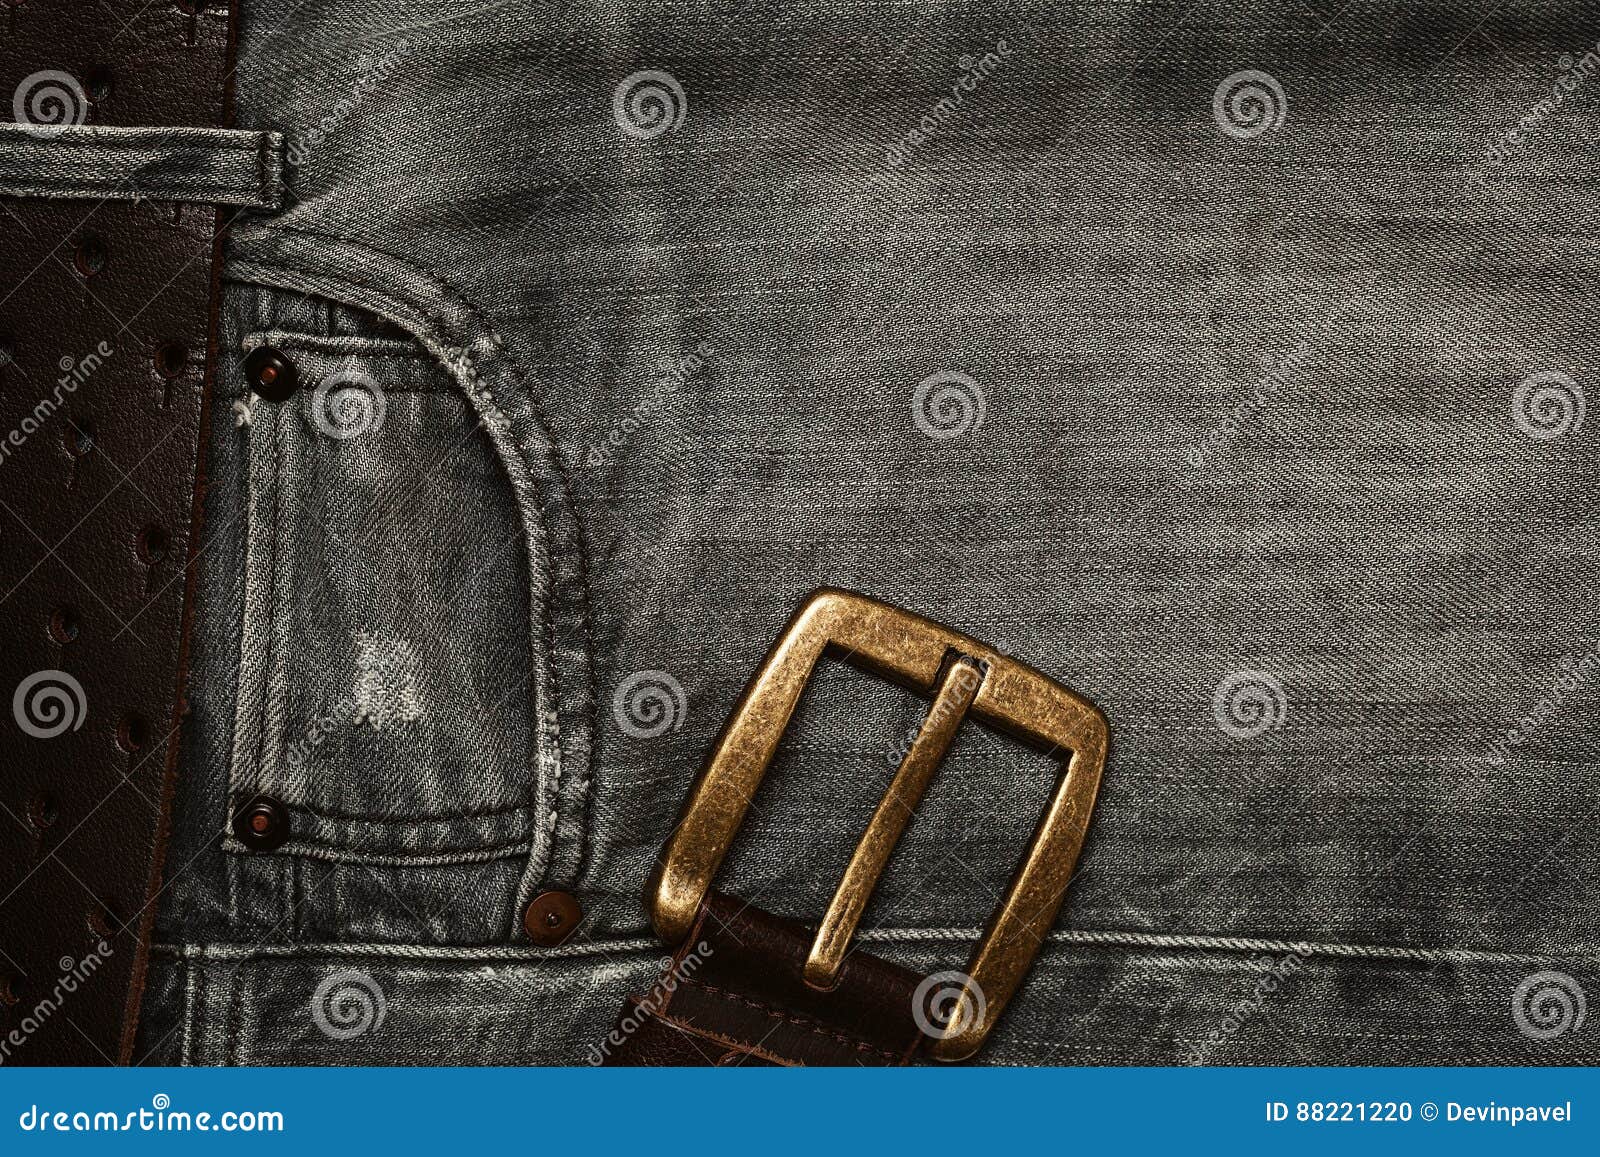 Black Jeans Denim Fabric Texture Stock Images - 3,273 Photos